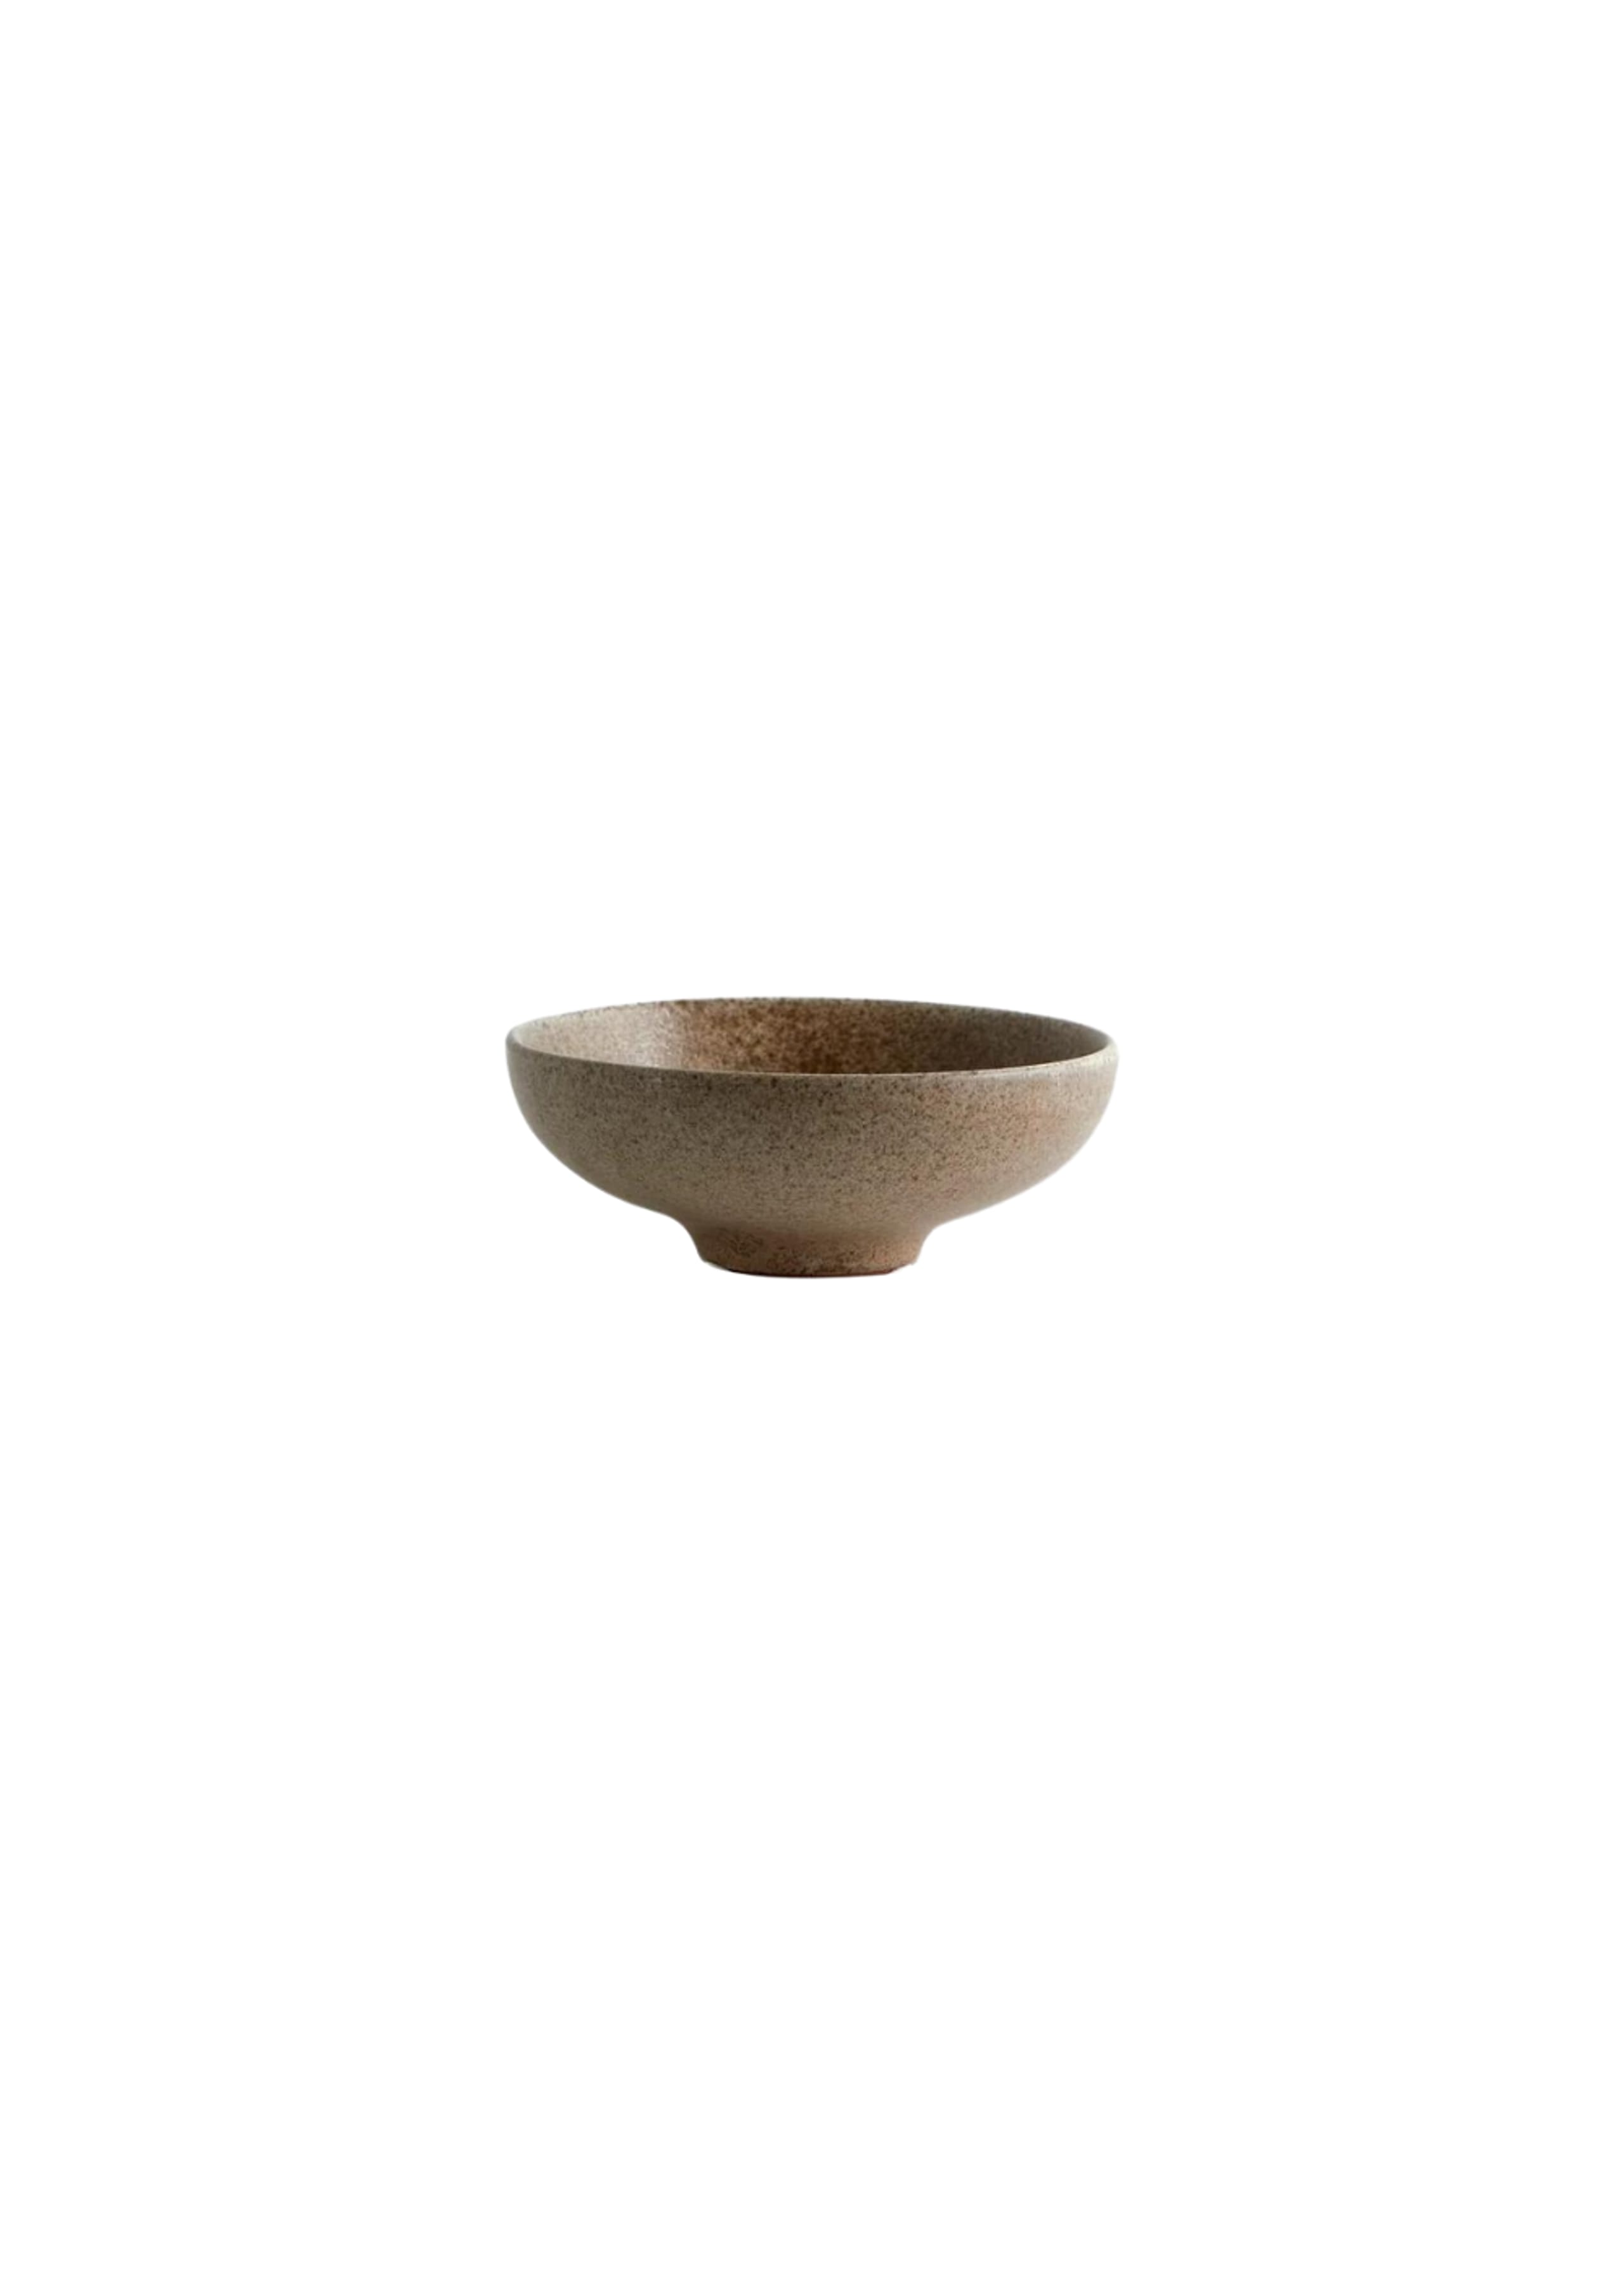 Nordal - Kom - Inez bowl - Small, sand